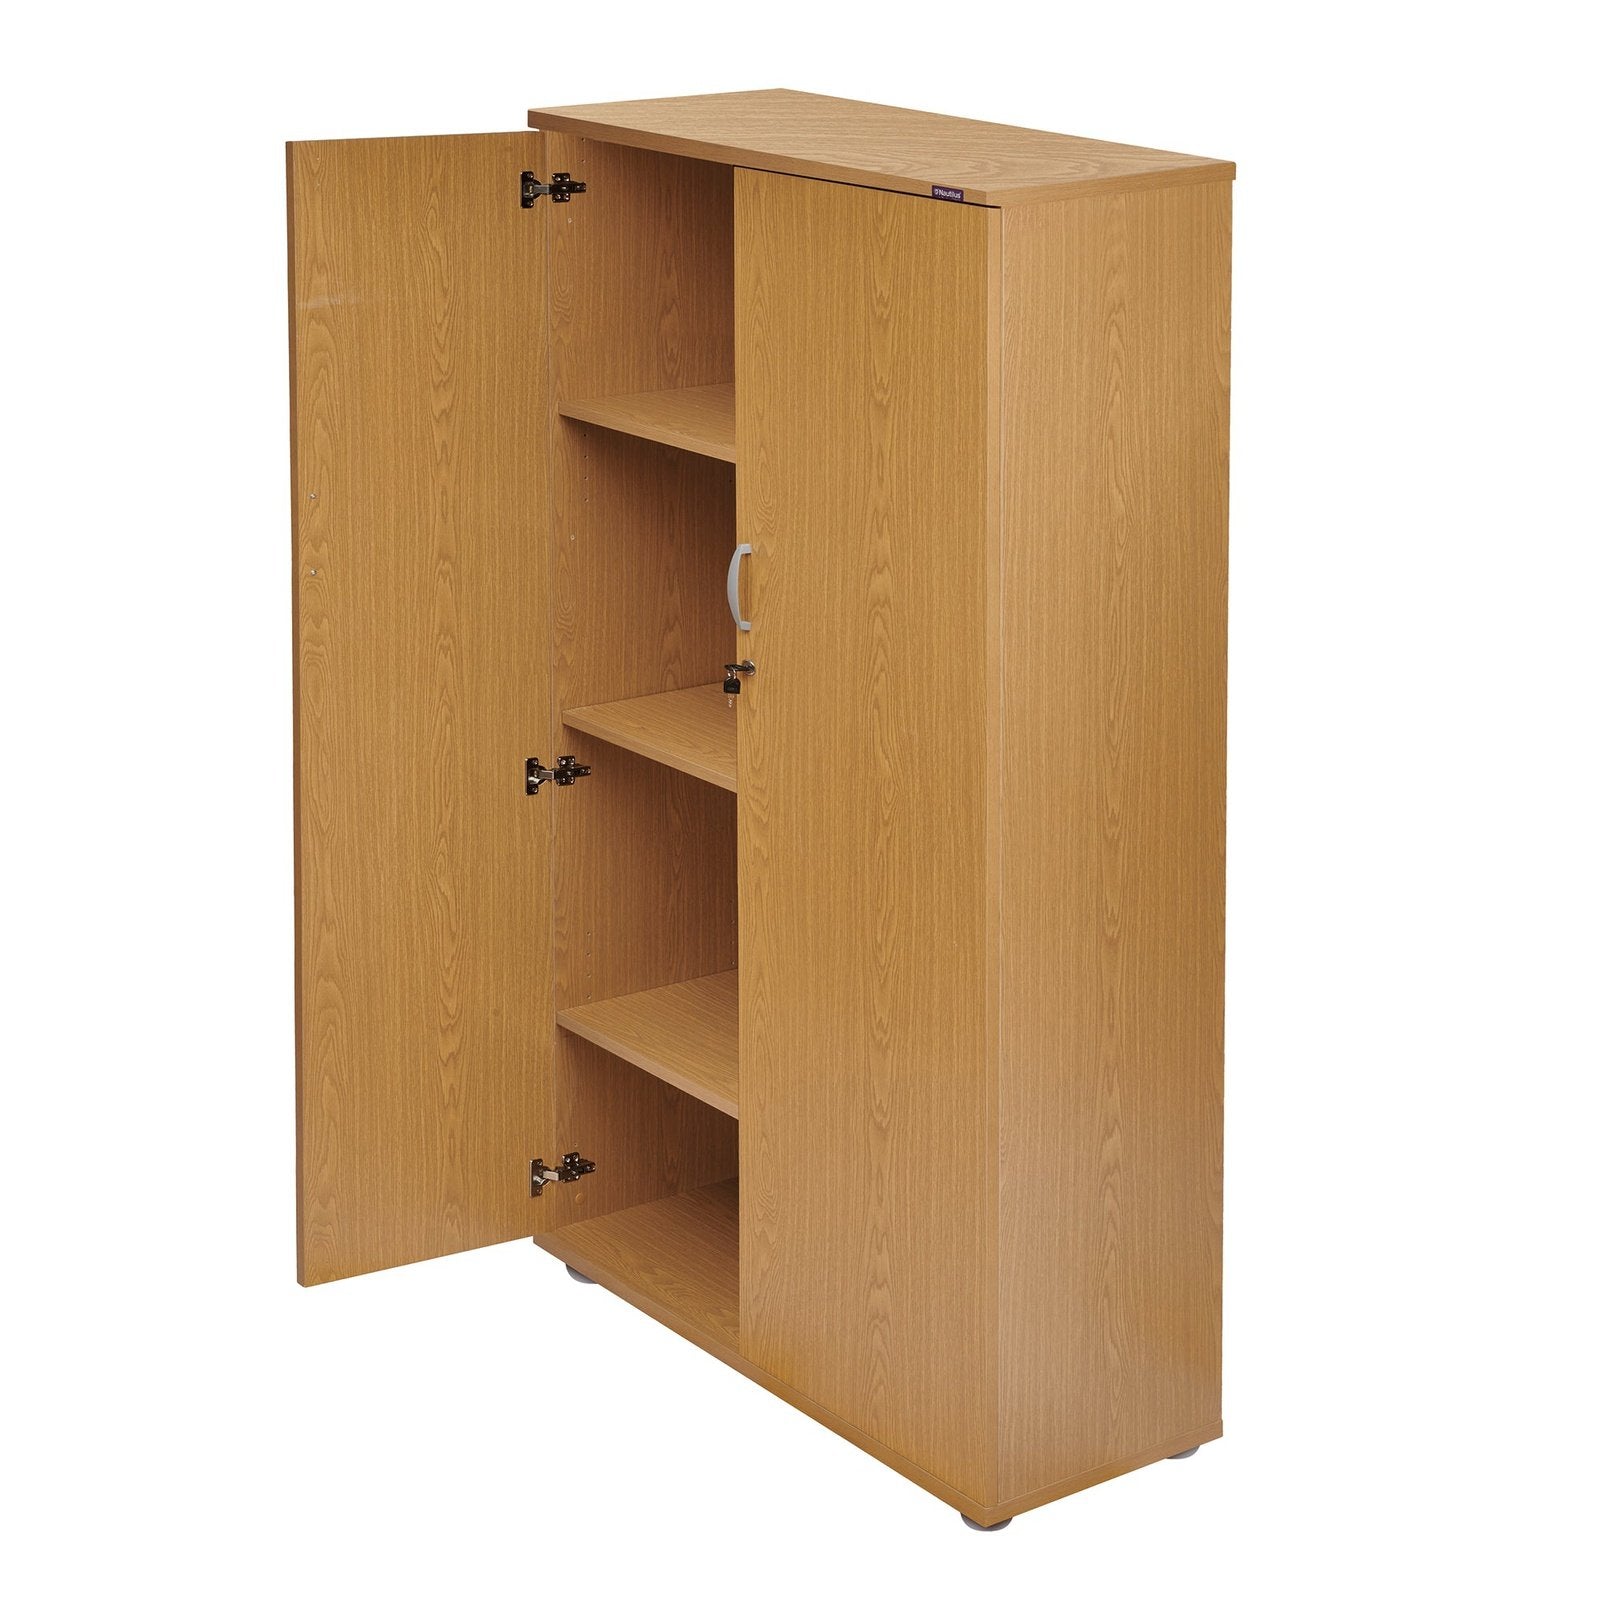 Cupboard 1600mm - 3 Shelf - Office Products Online